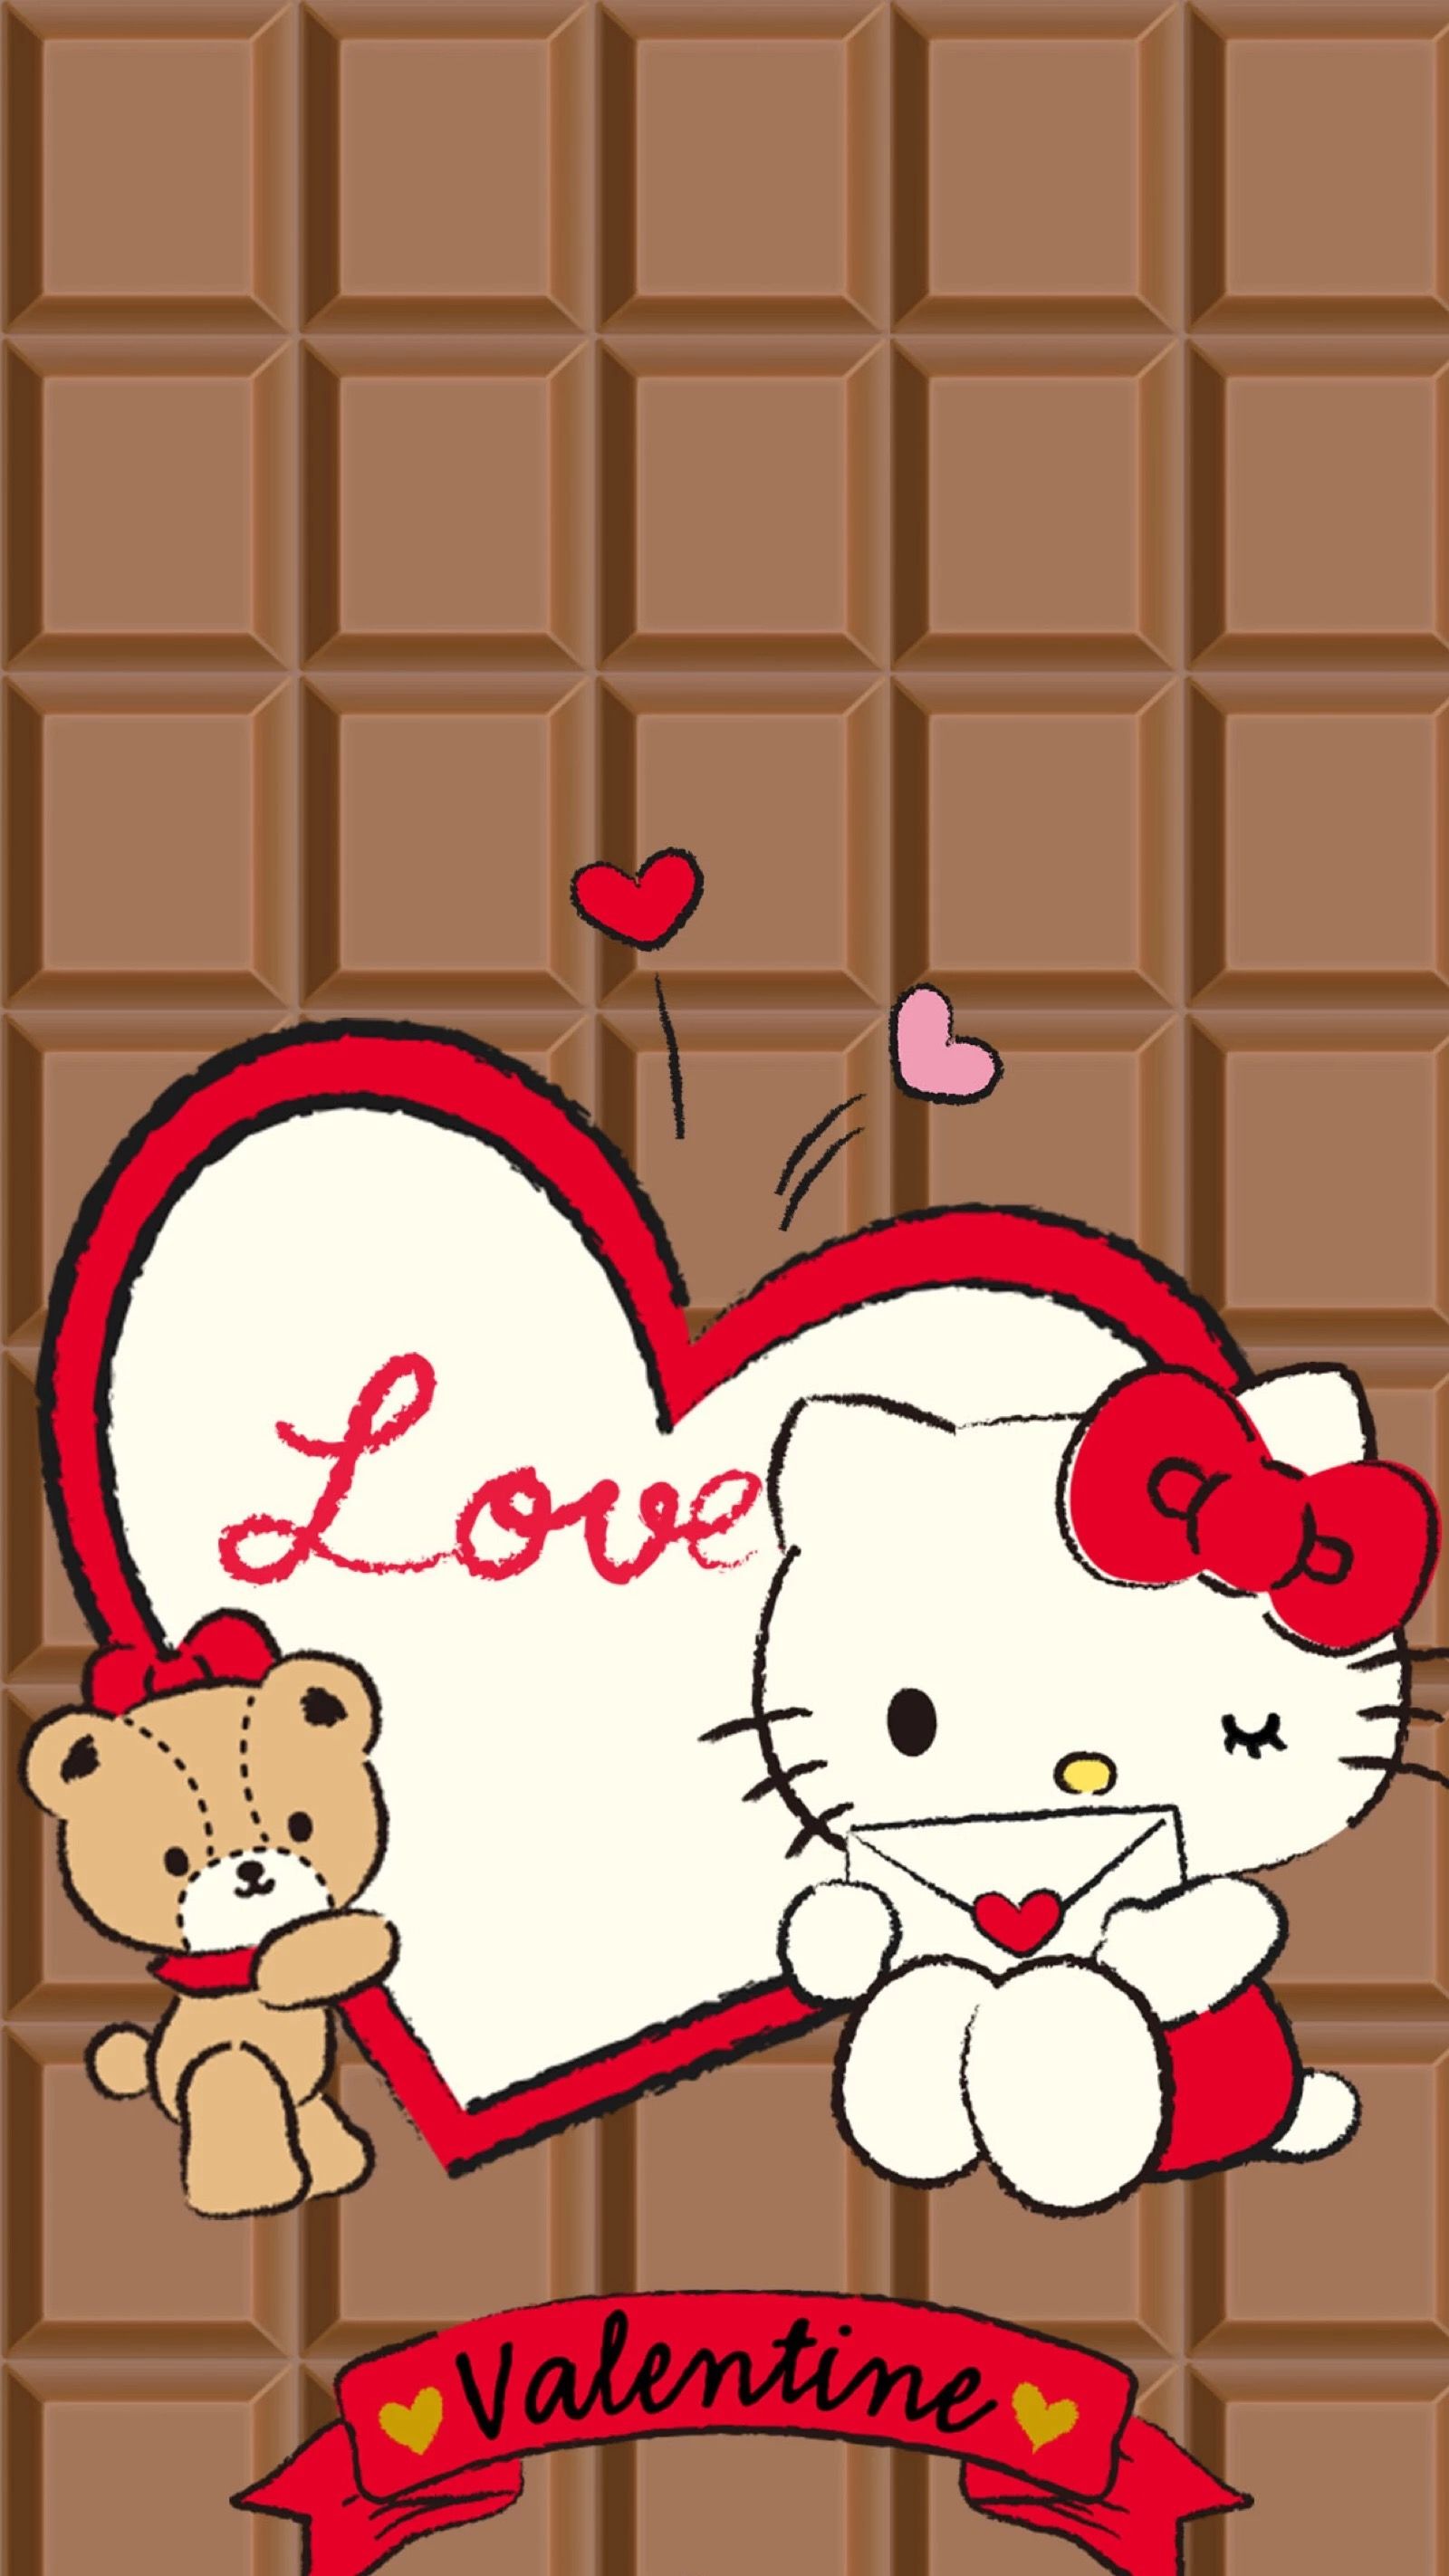 My Favorite Kitty. Hello kitty drawing, Hello kitty art, Hello kitty background